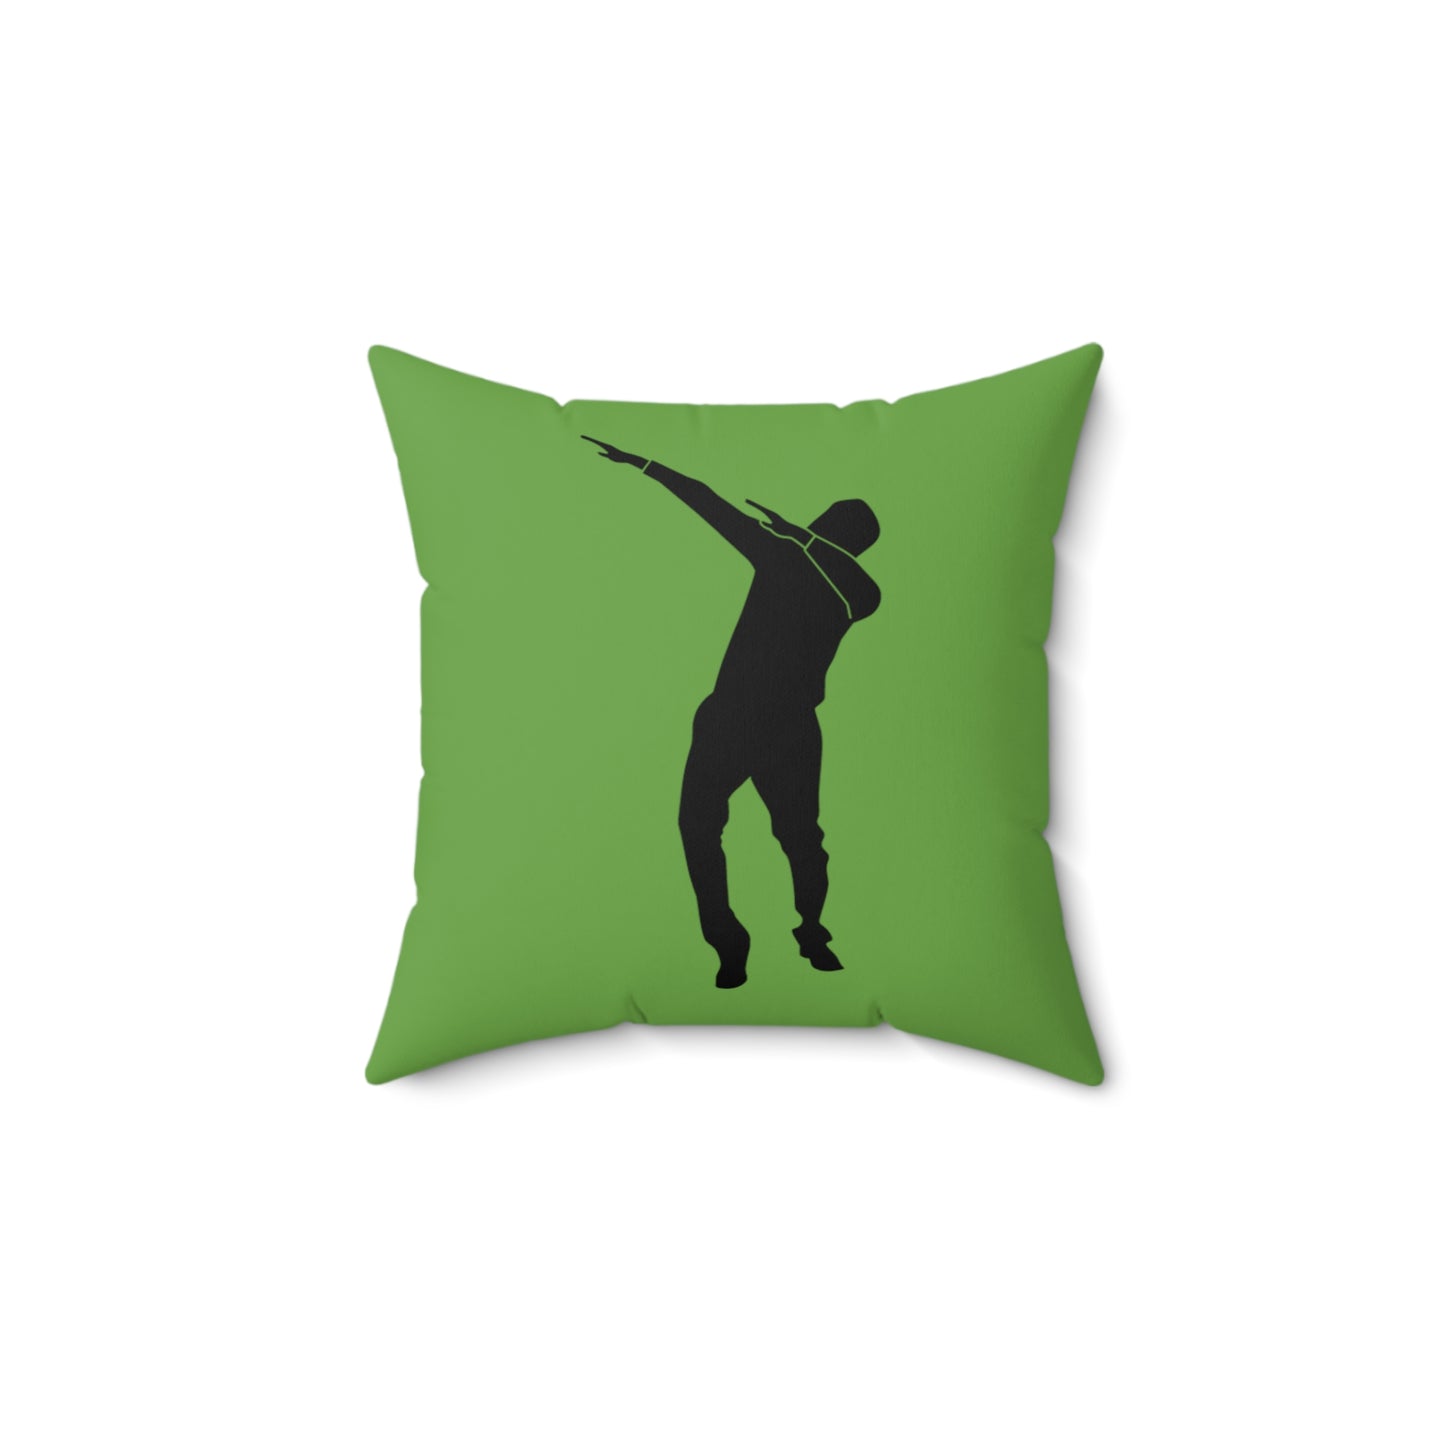 Spun Polyester Square Pillow: Dance Green